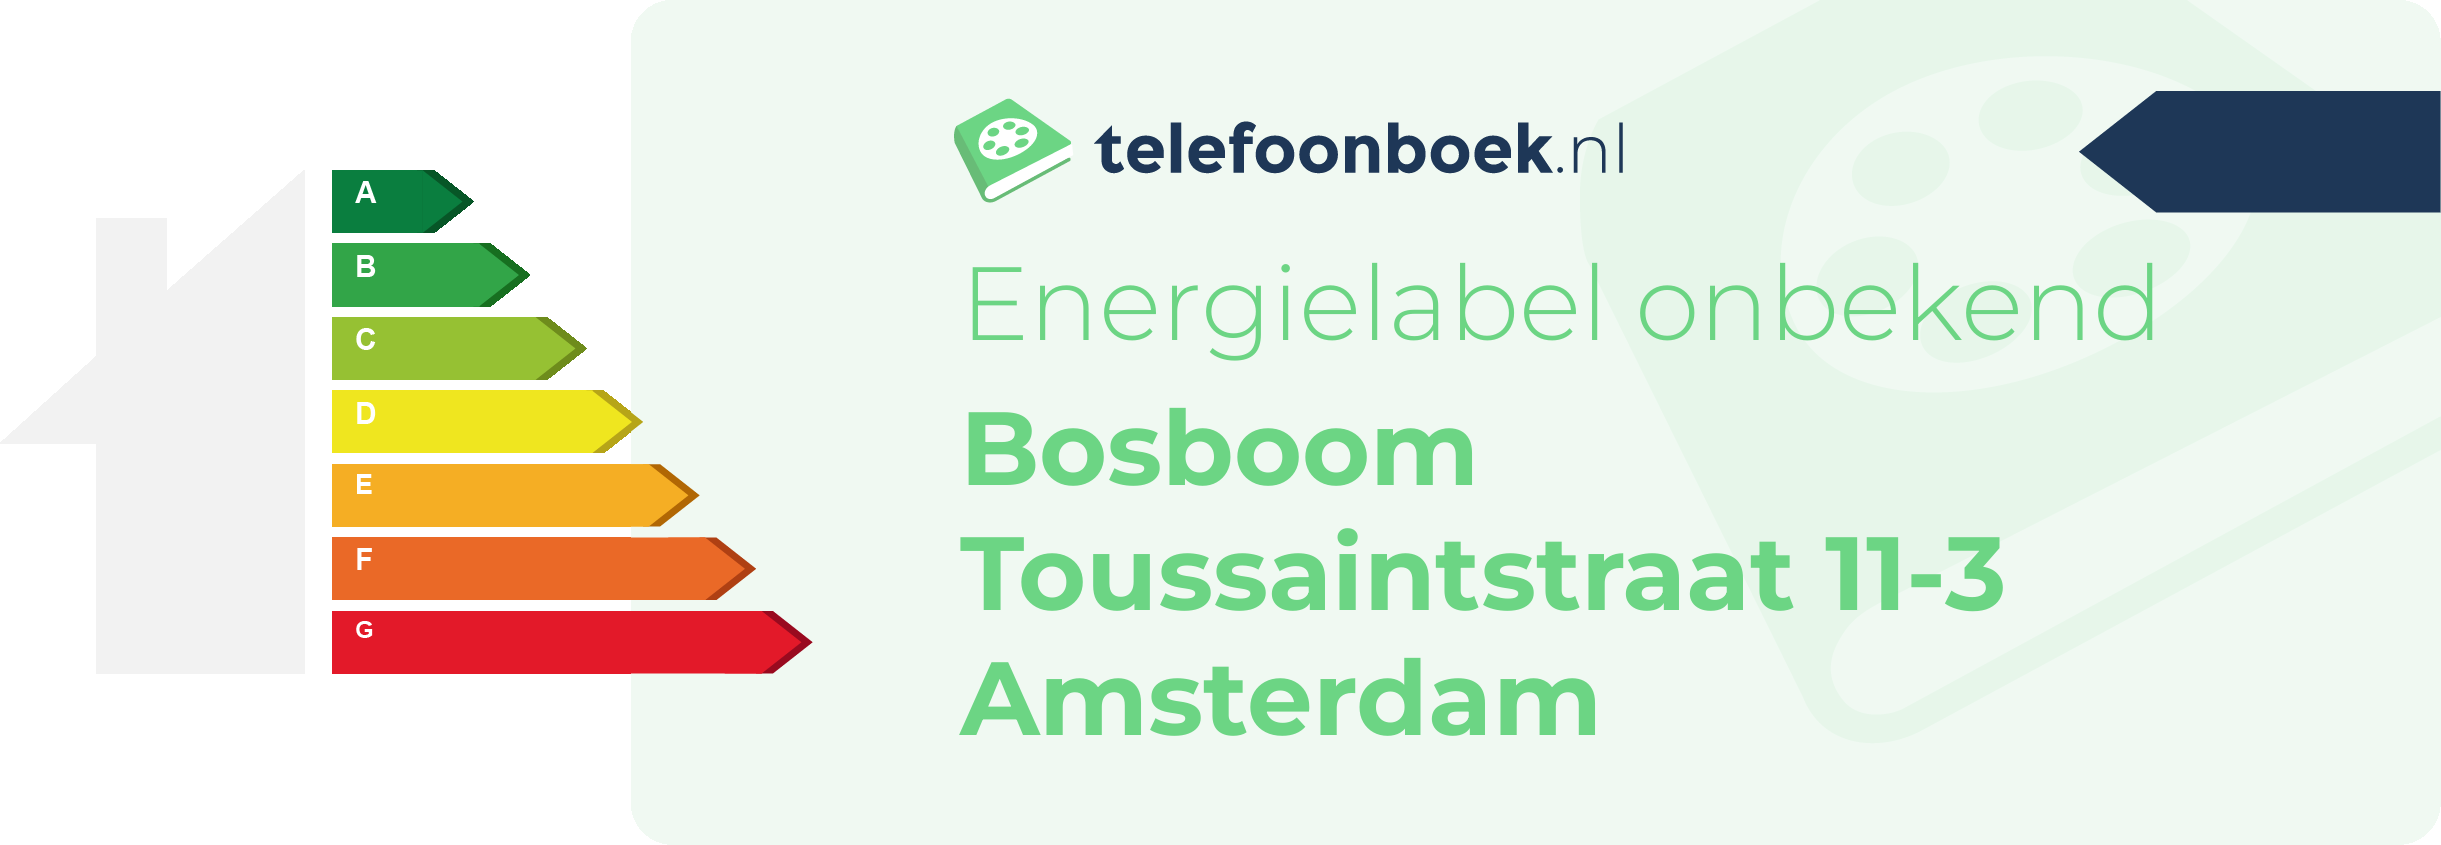 Energielabel Bosboom Toussaintstraat 11-3 Amsterdam